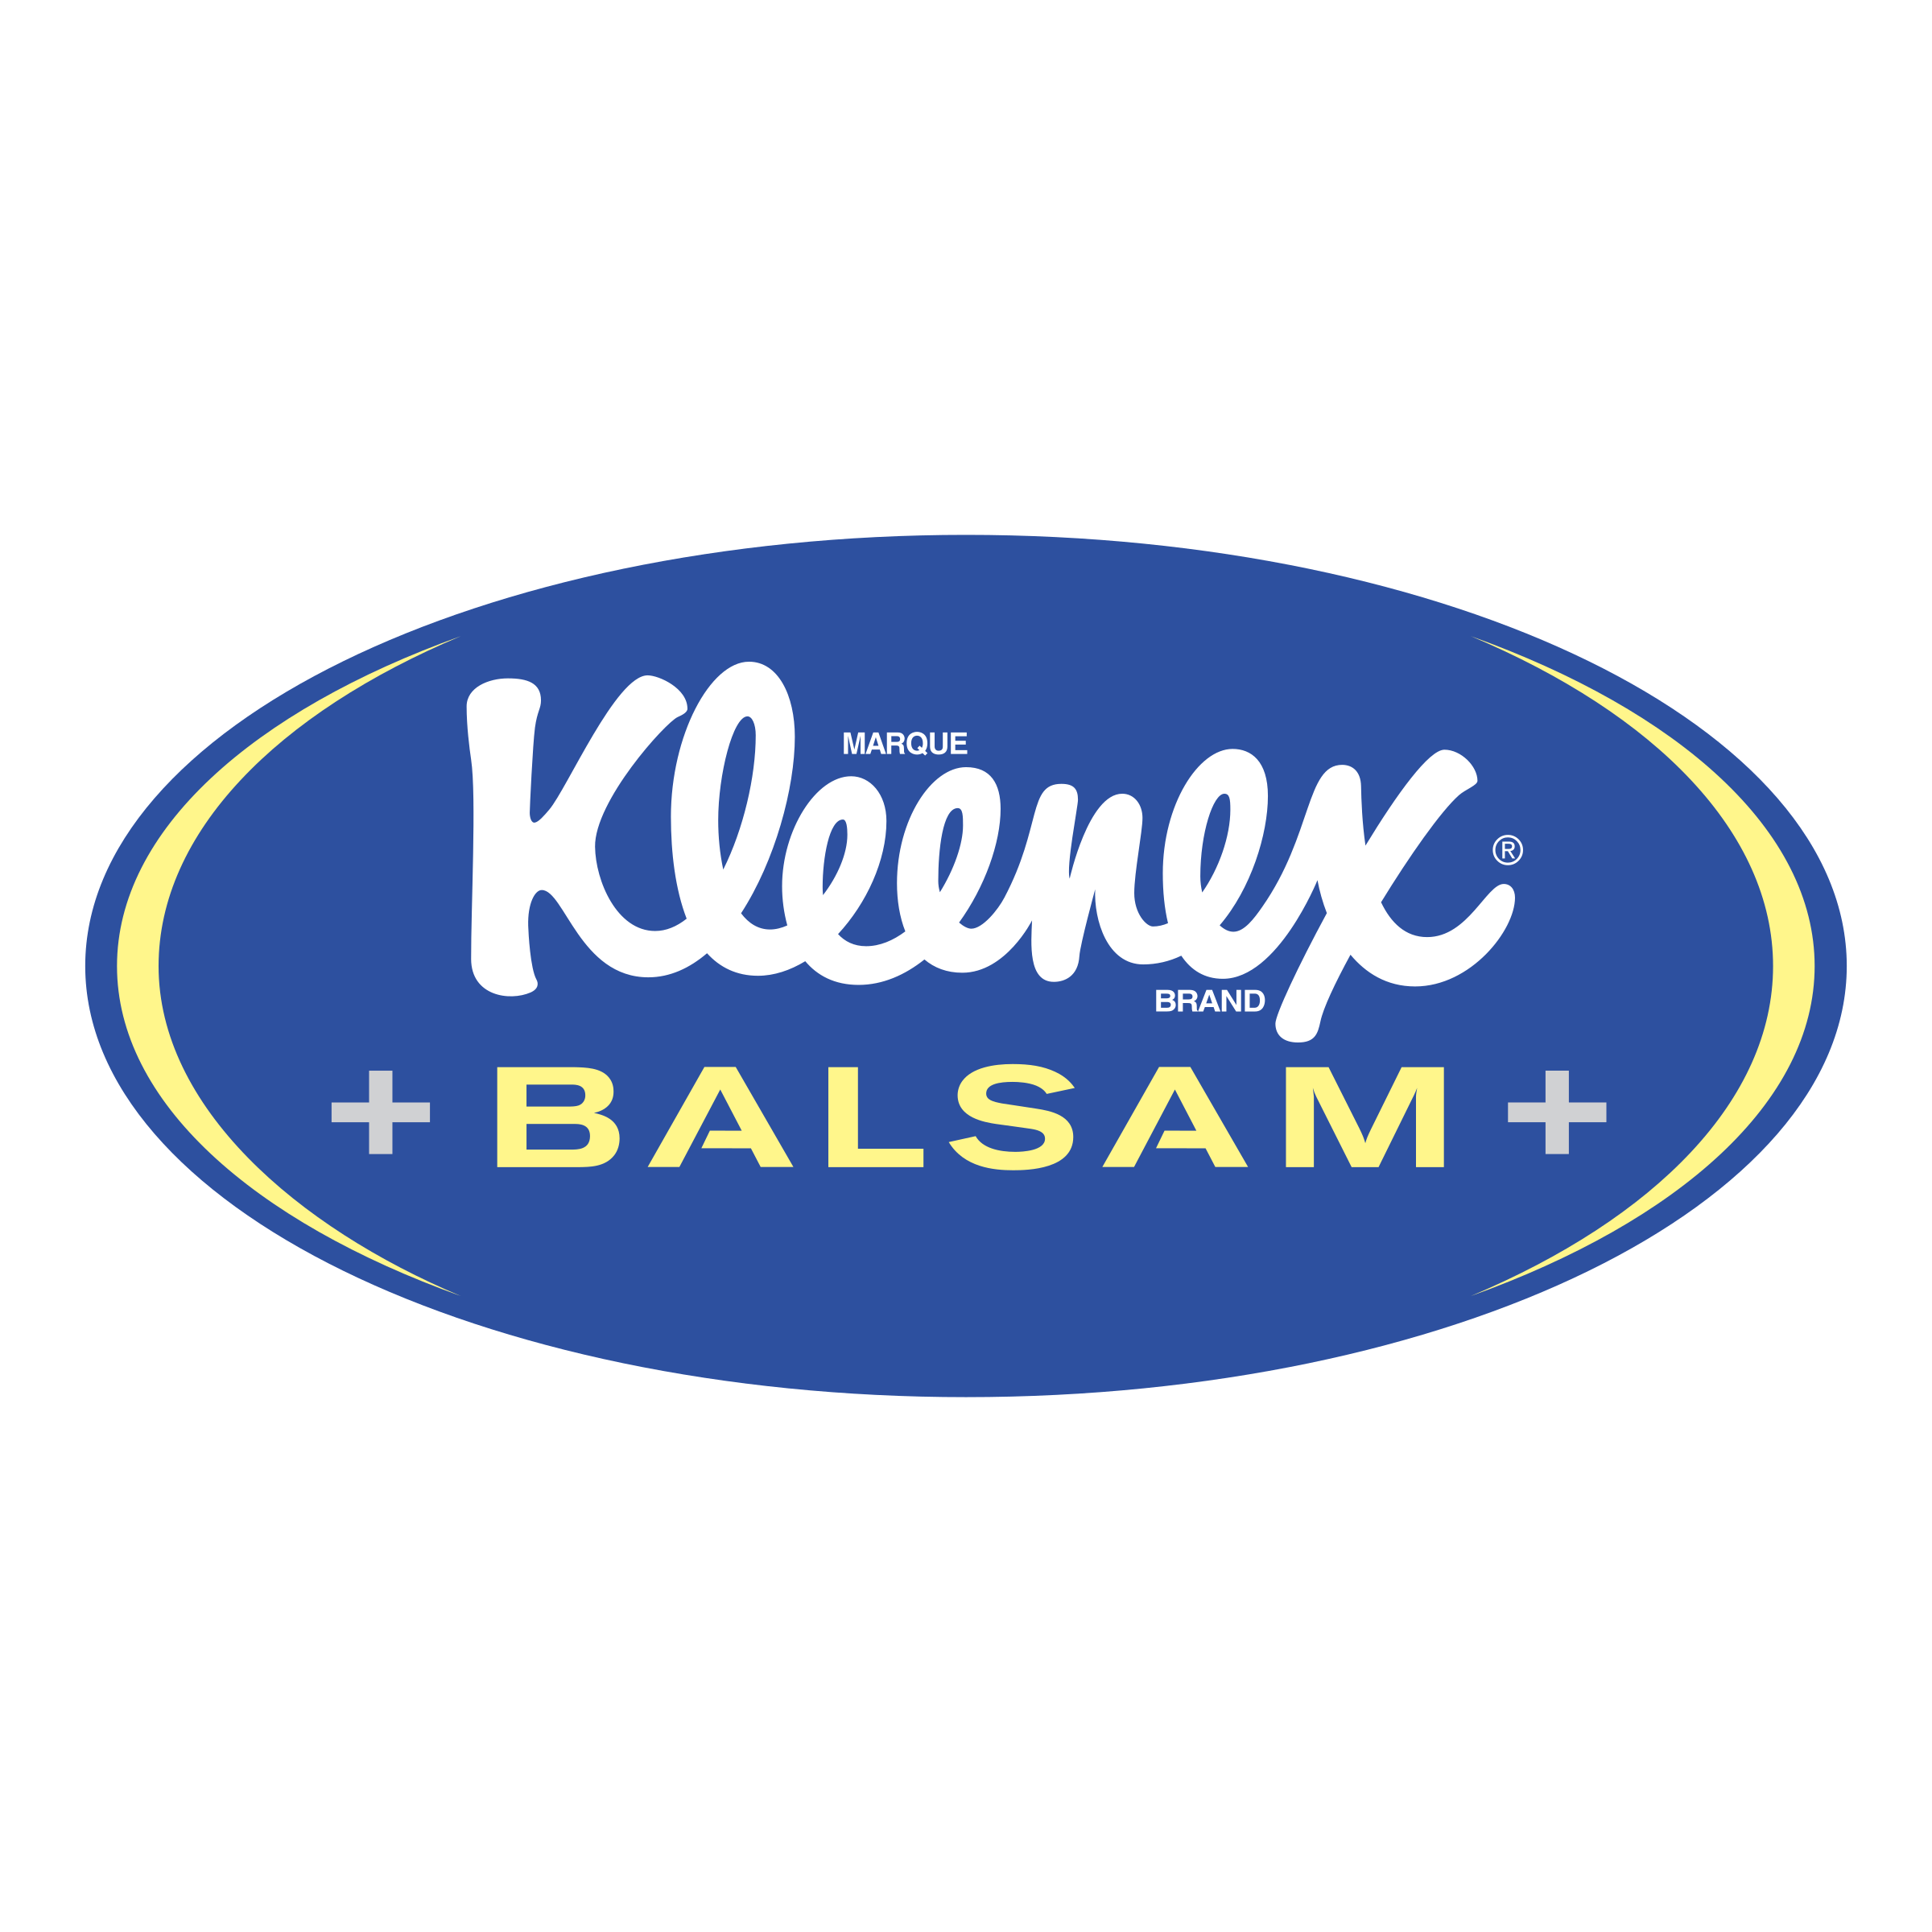 Kleenex Logo - Kleenex Logo PNG Transparent & SVG Vector - Freebie Supply